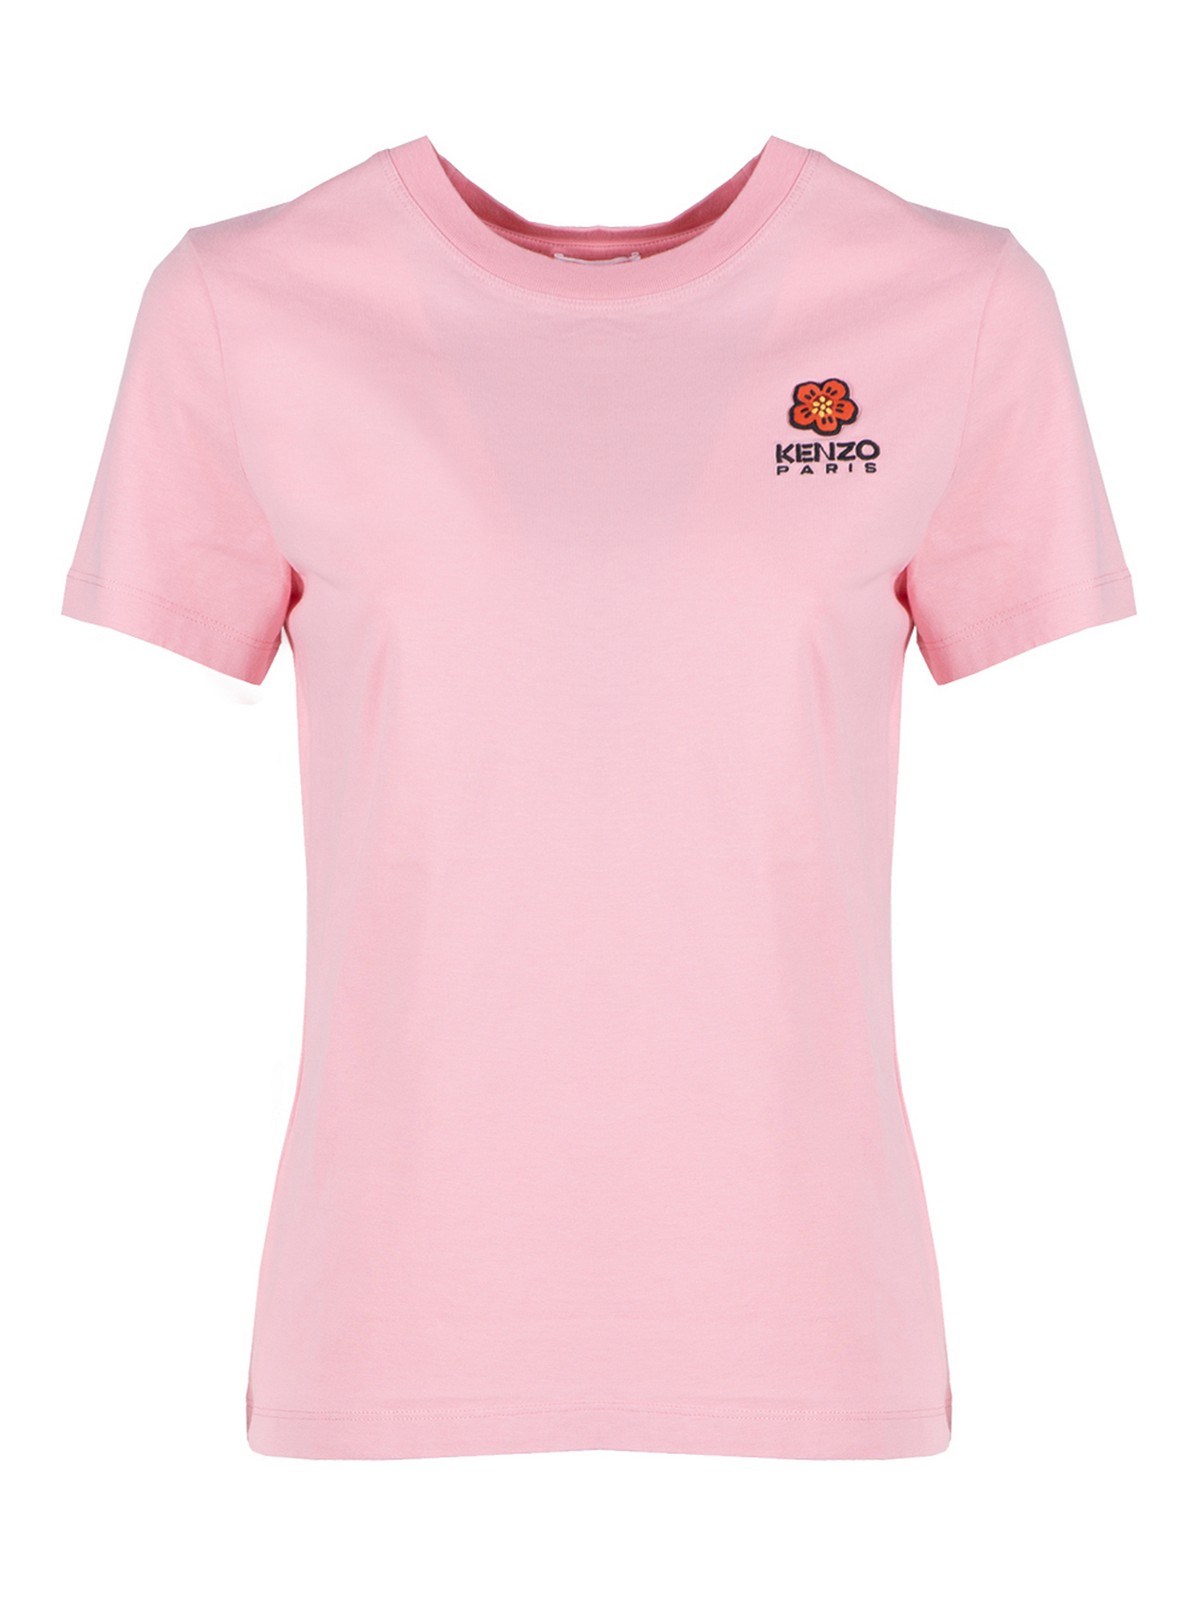 Kenzo Crest Logo Classic Tshirt In Pink